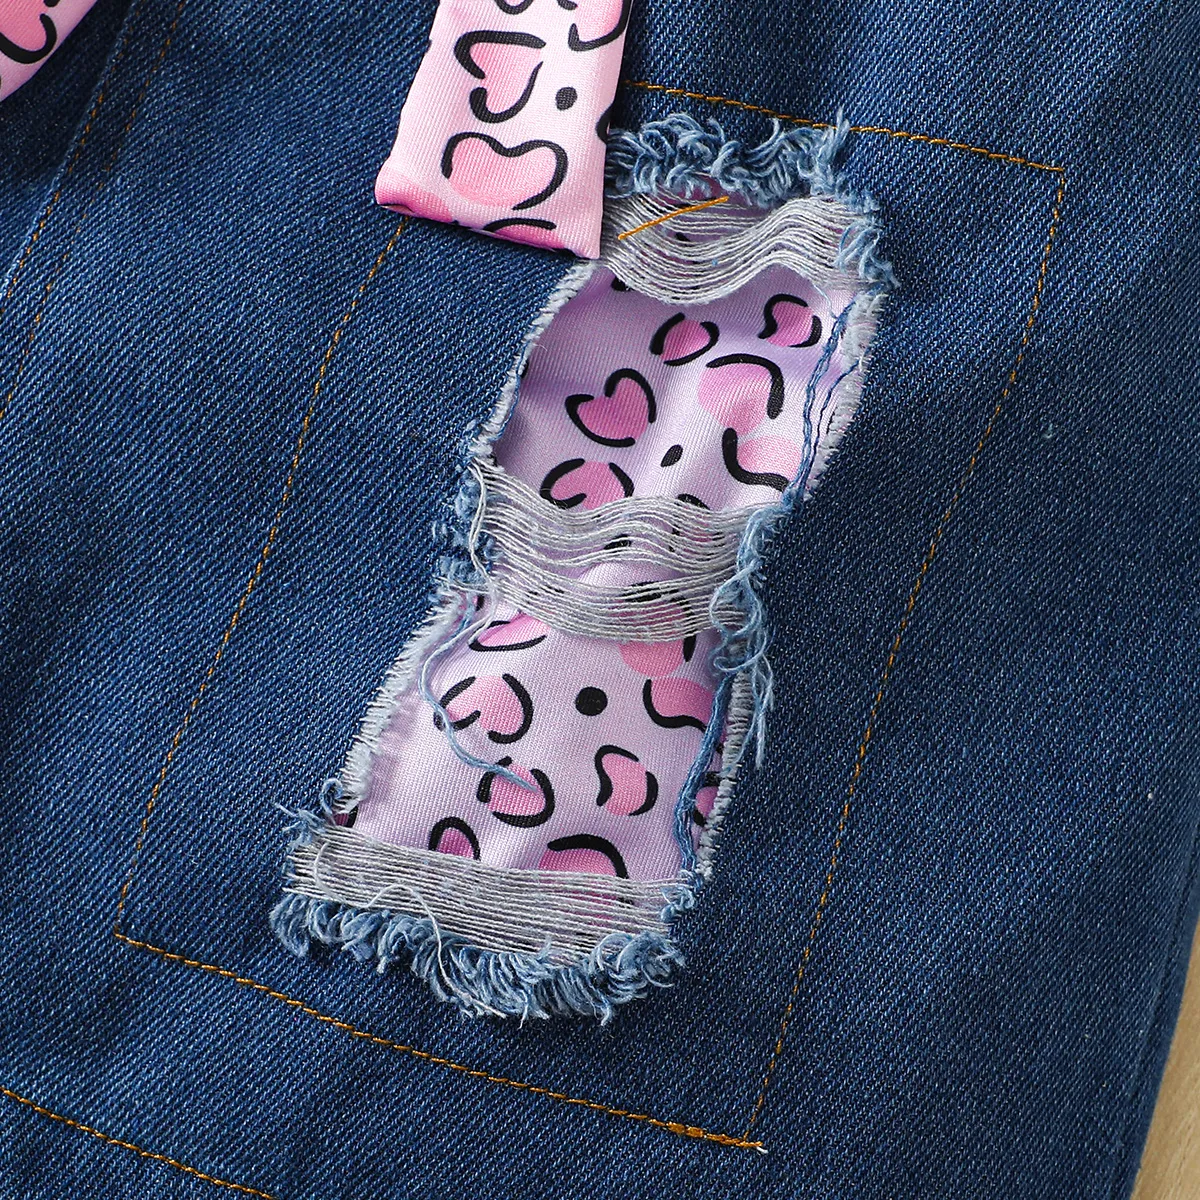 Childlike Character 3pcs Denim Skirt Suit for Girls - 65% Cotton Pink big image 1